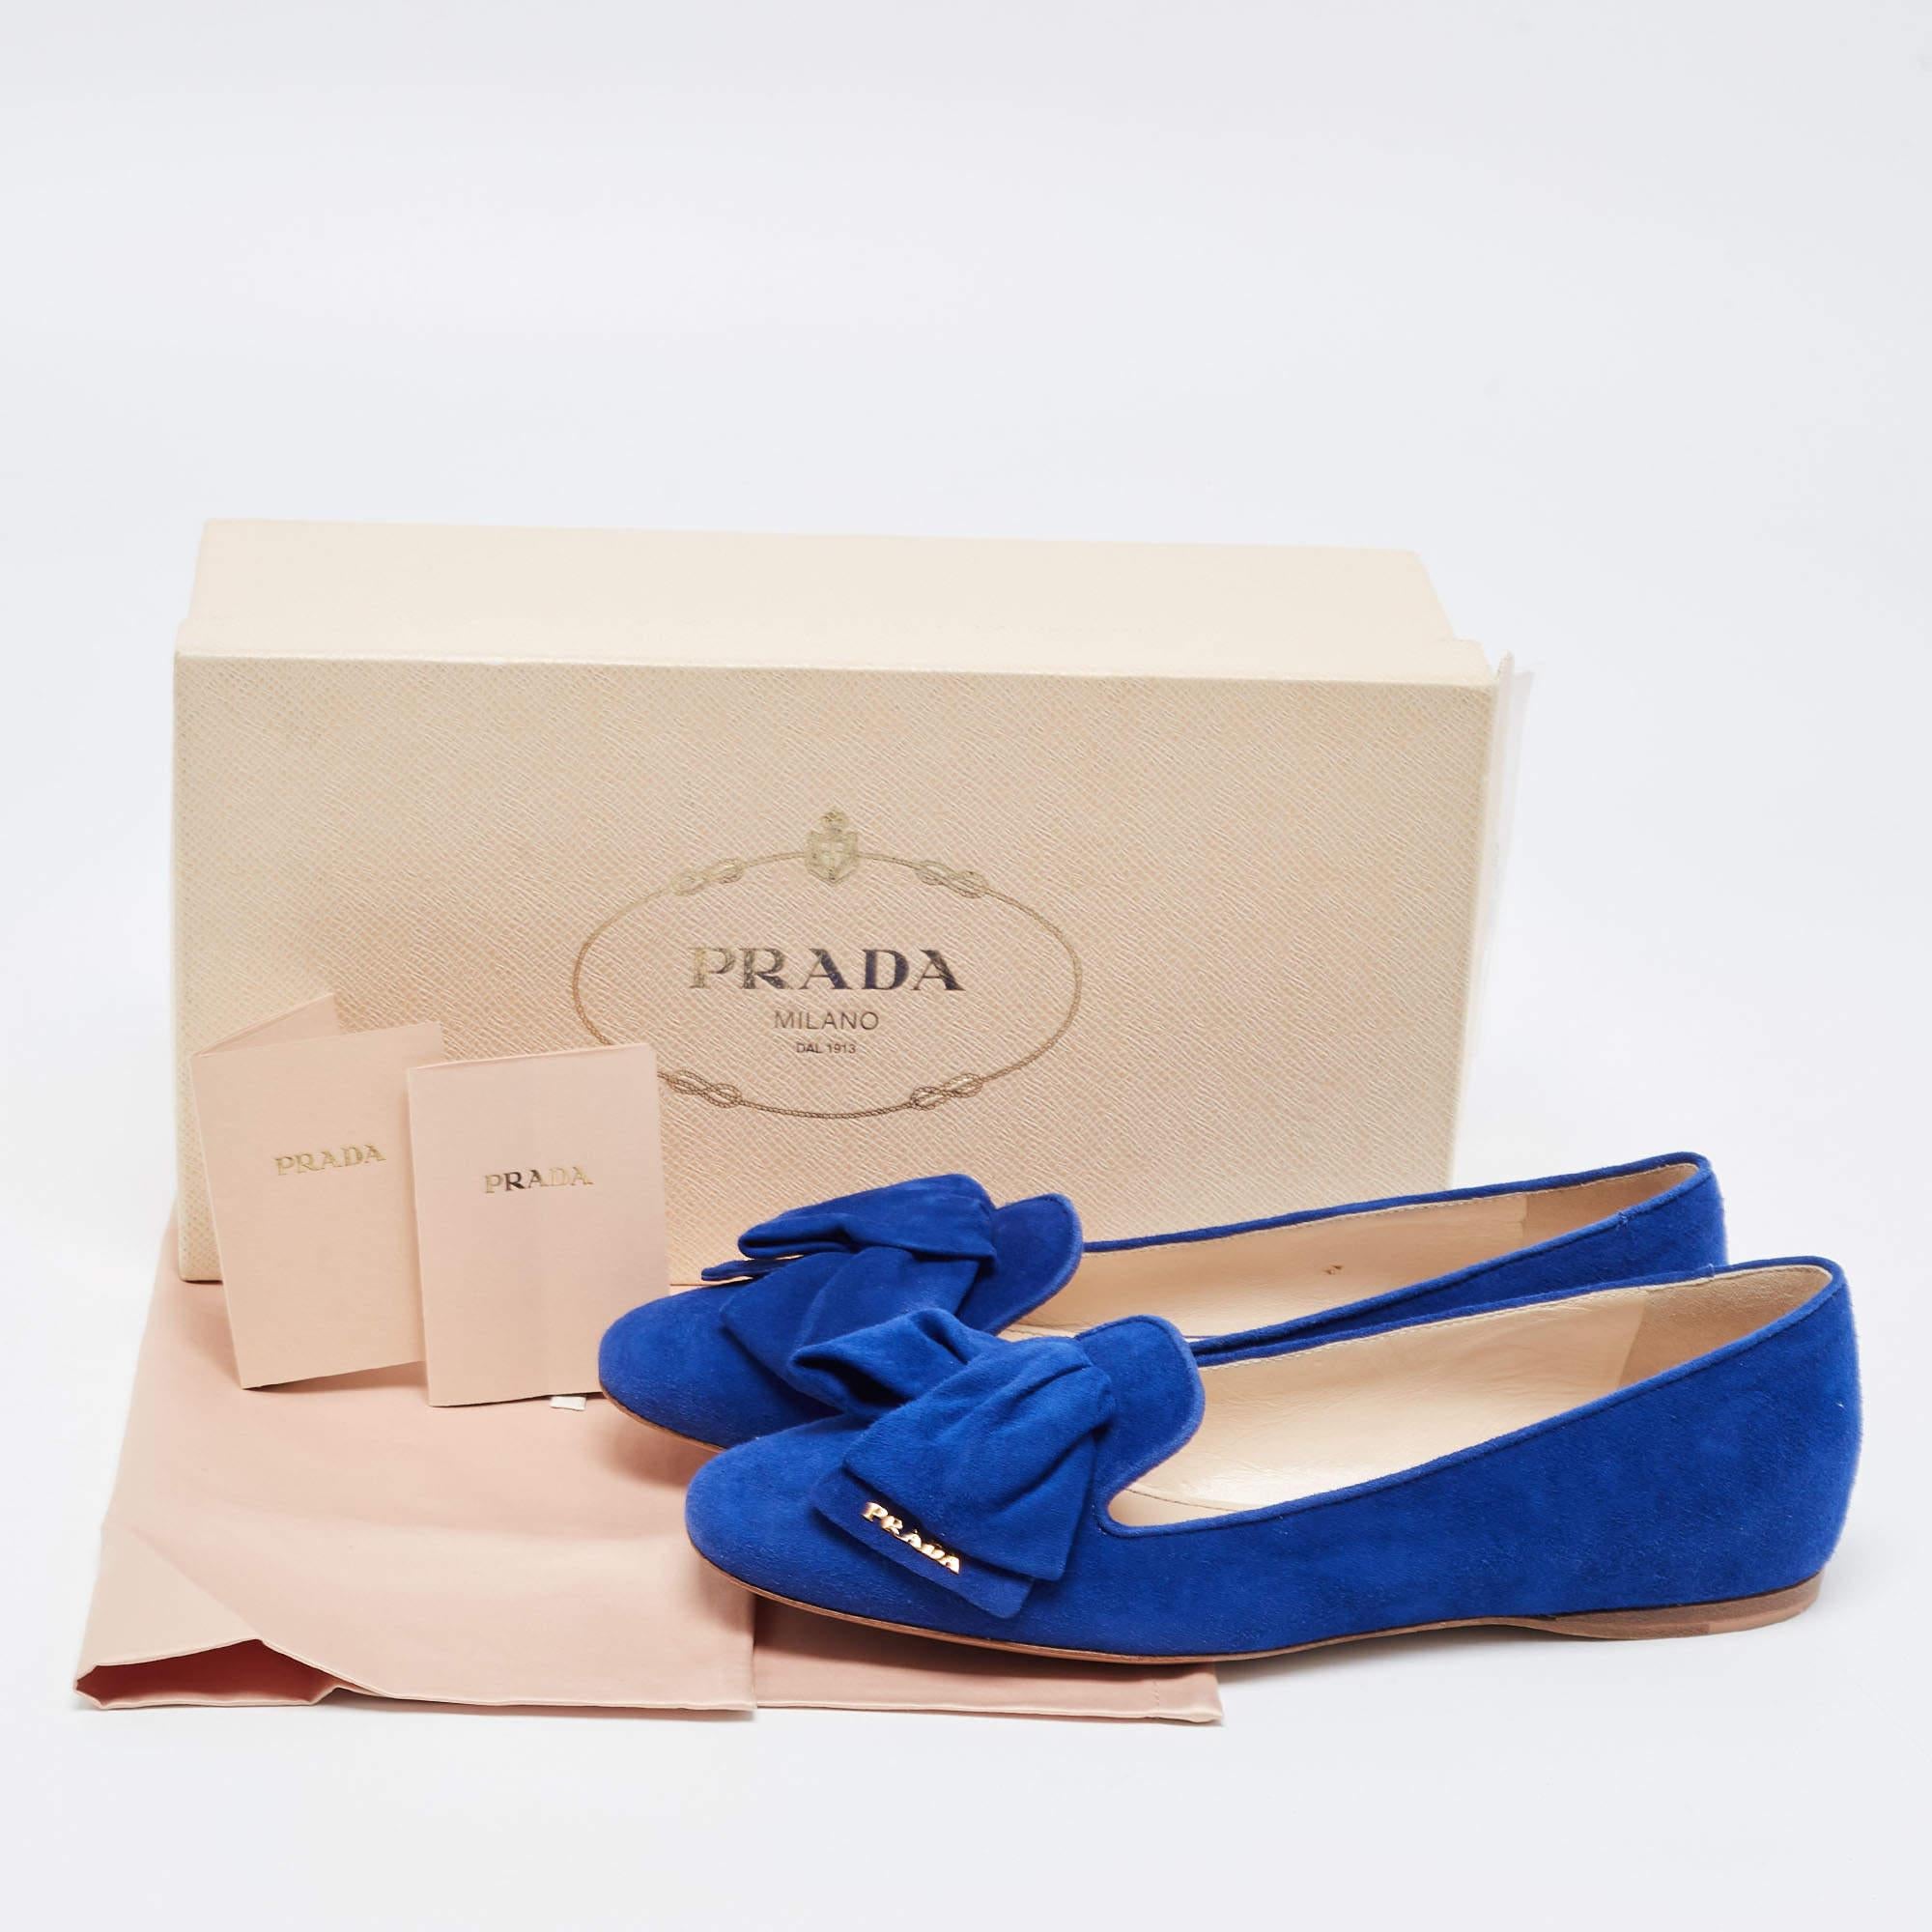 Prada Blue Suede Bow Ballet Flats Size 37.5 4